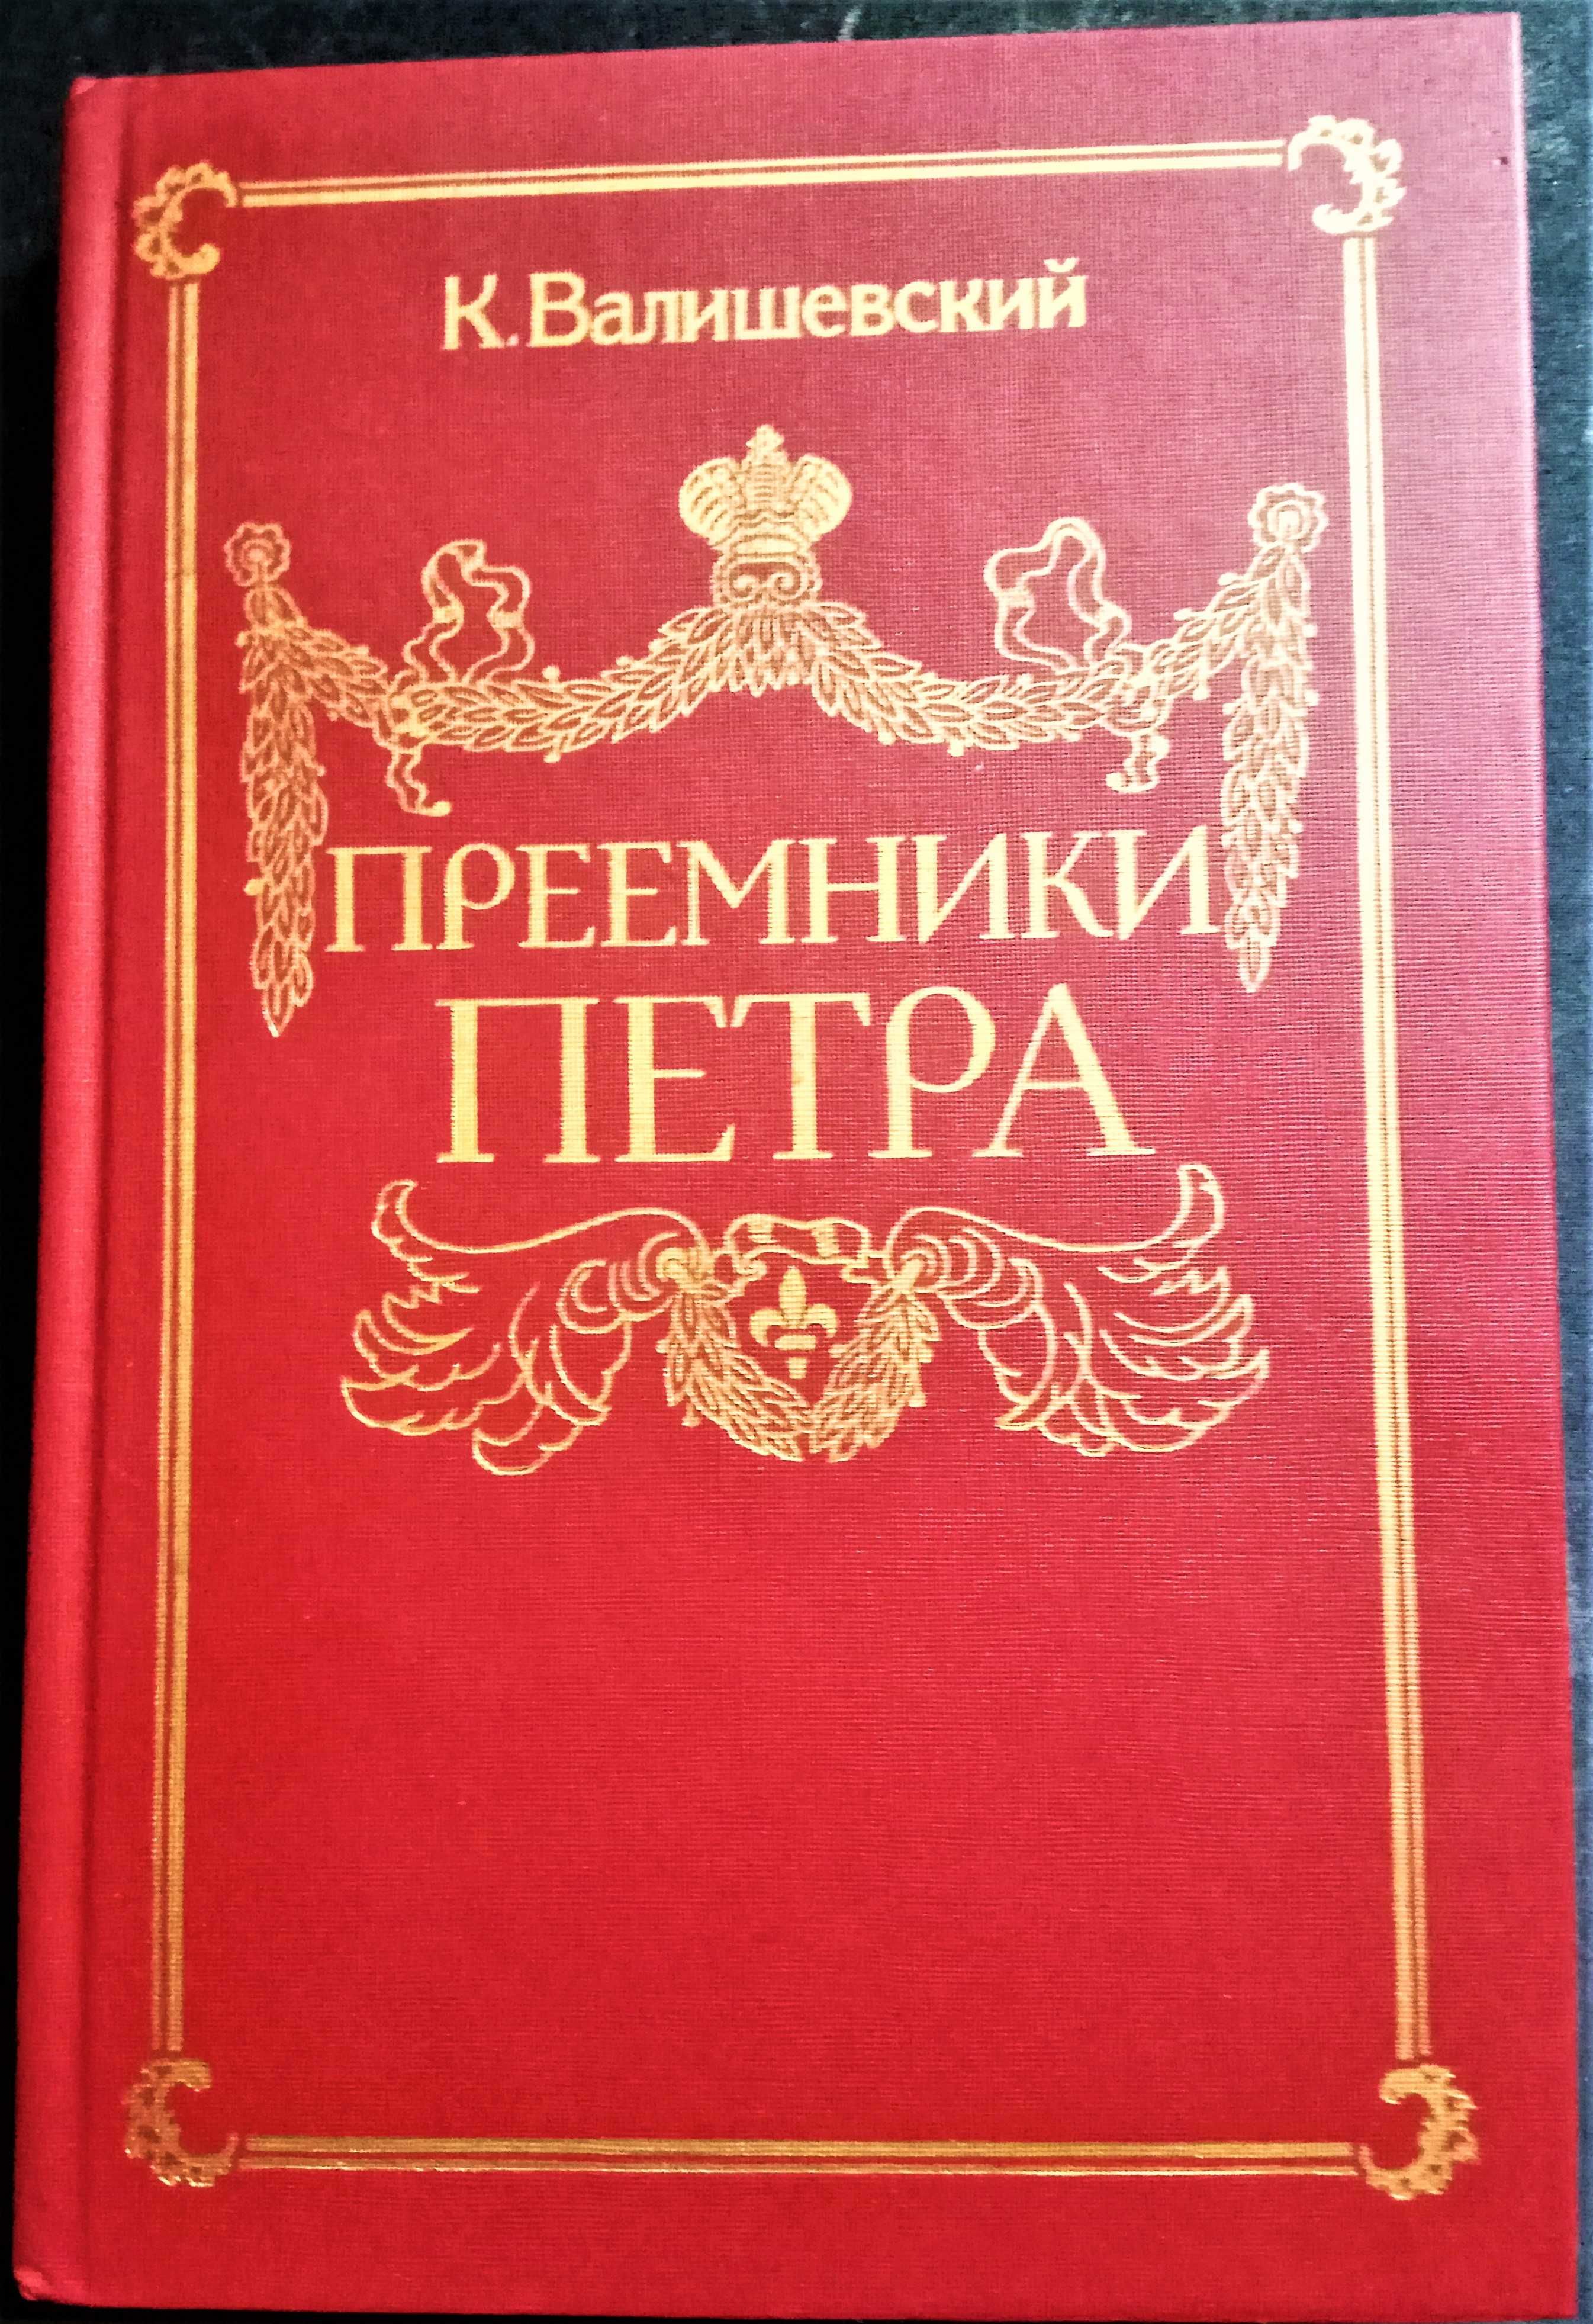 3 книги - Роман императрицы + Преемники Петра + Адъютант императрицы